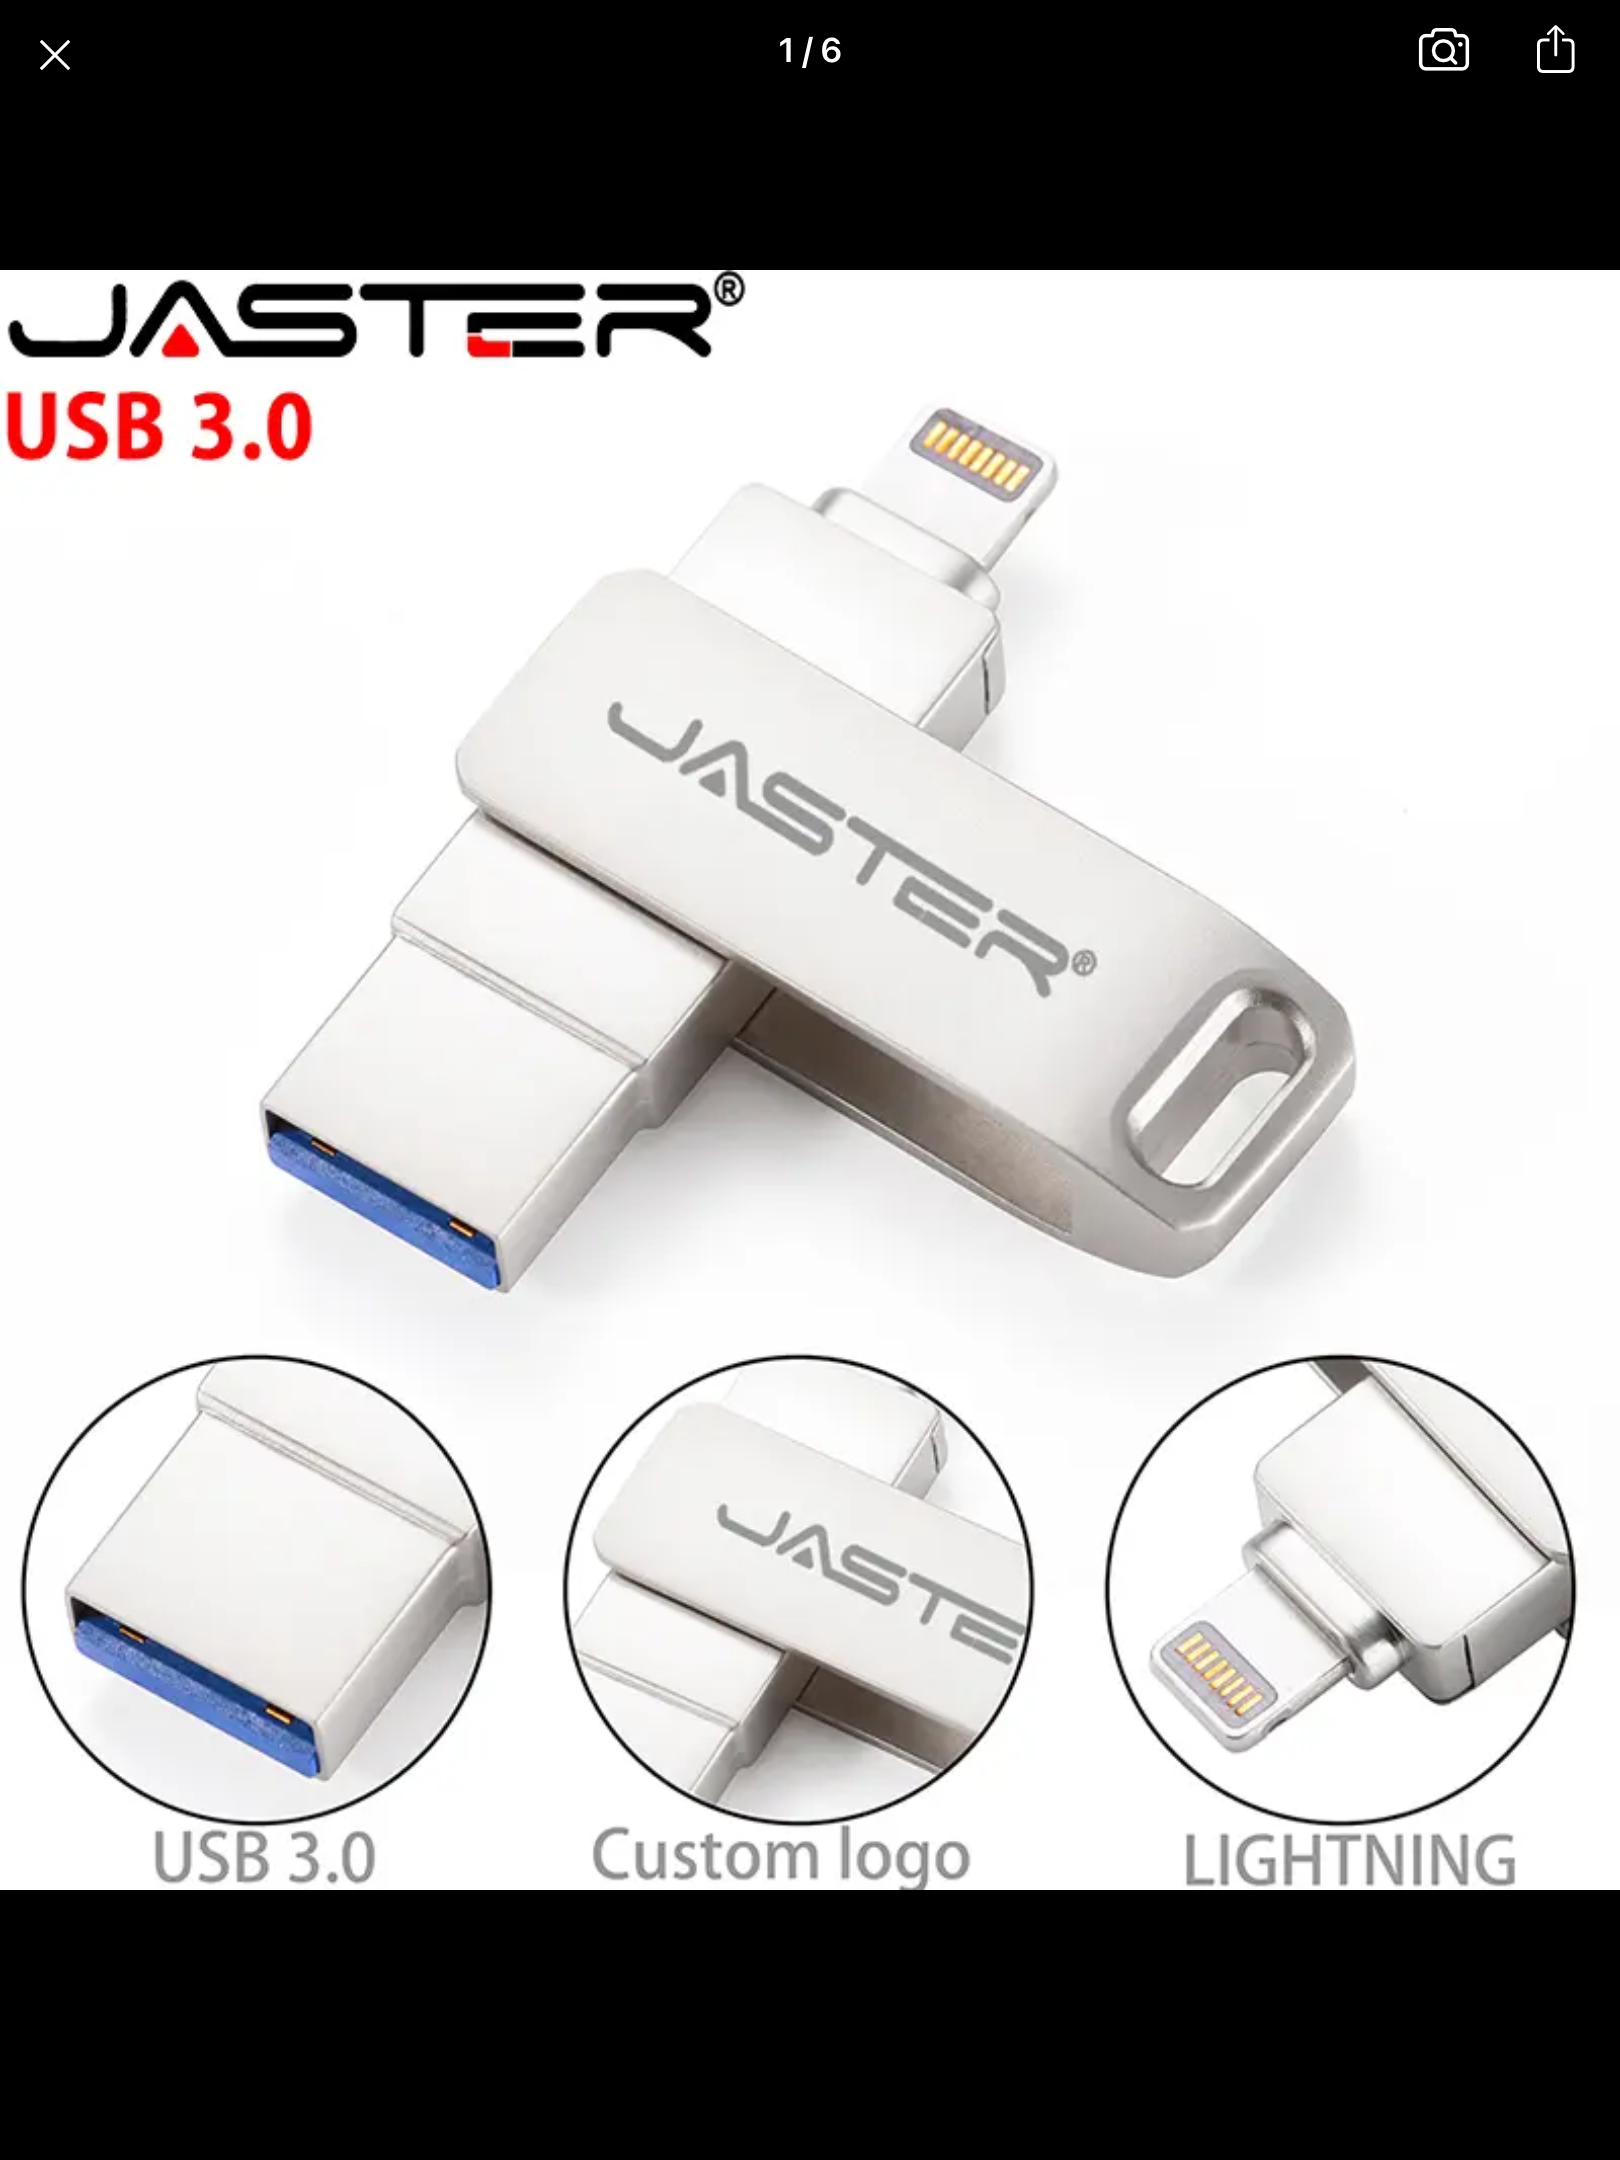 Double- headed USB Flash